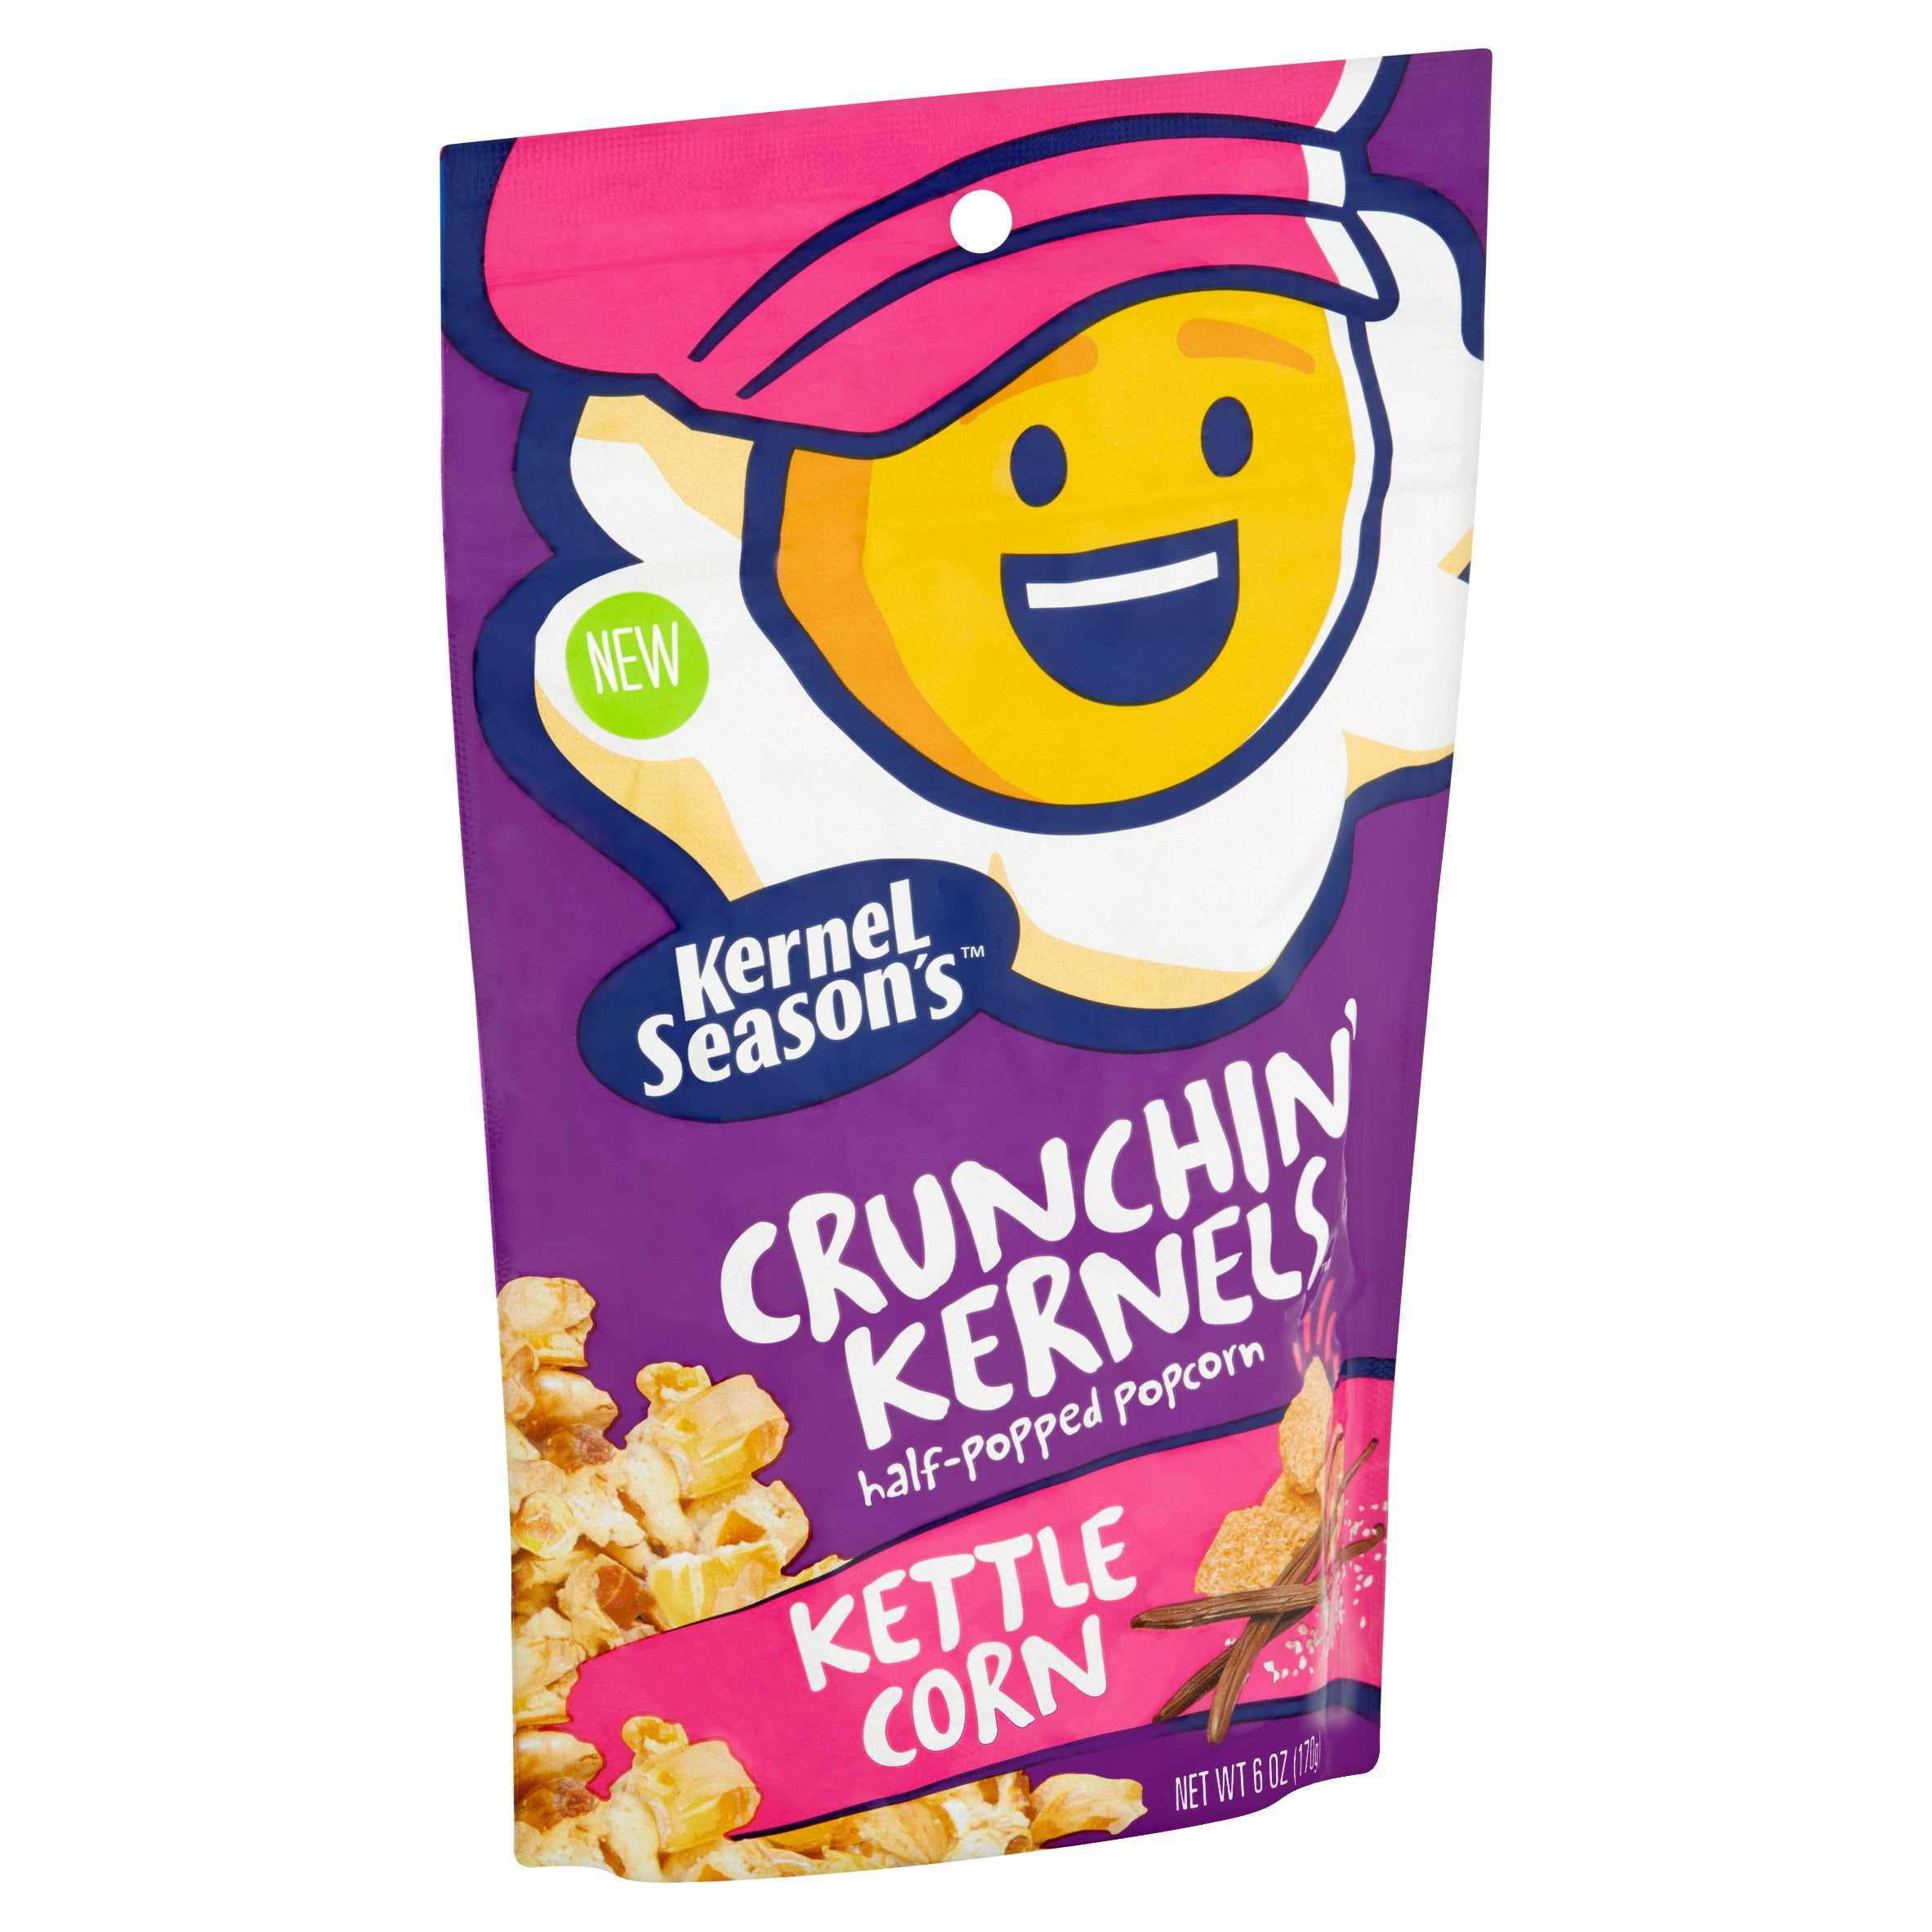 Kernel Season's Crunchin' Kernels Kettle Corn Half-Popped 6 oz, 6 pack - Walmart.com